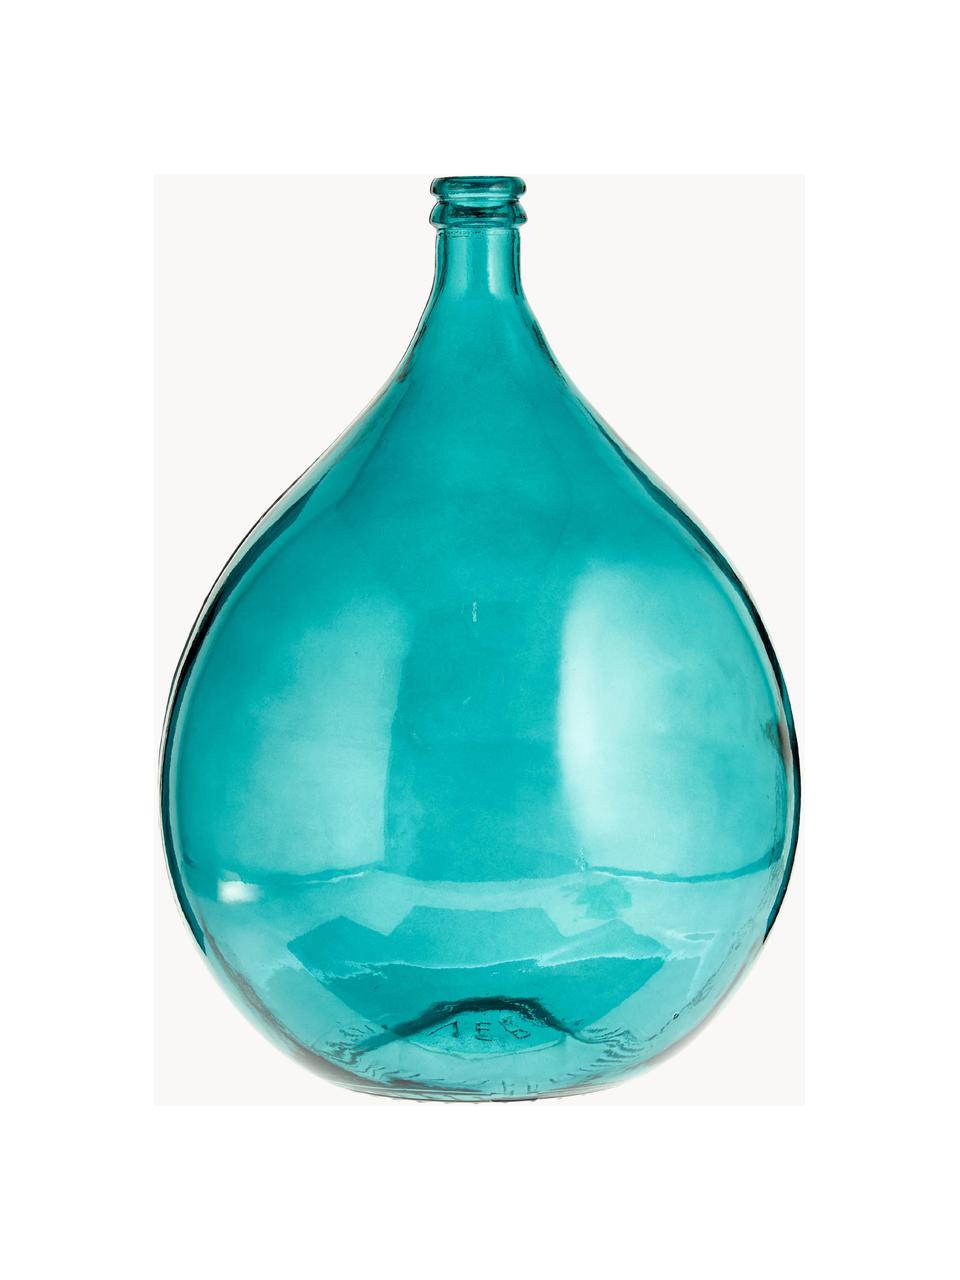 Vase de sol Drop en verre recyclé, Verre recyclé, Bleu, Ø 40 x haut. 56 cm